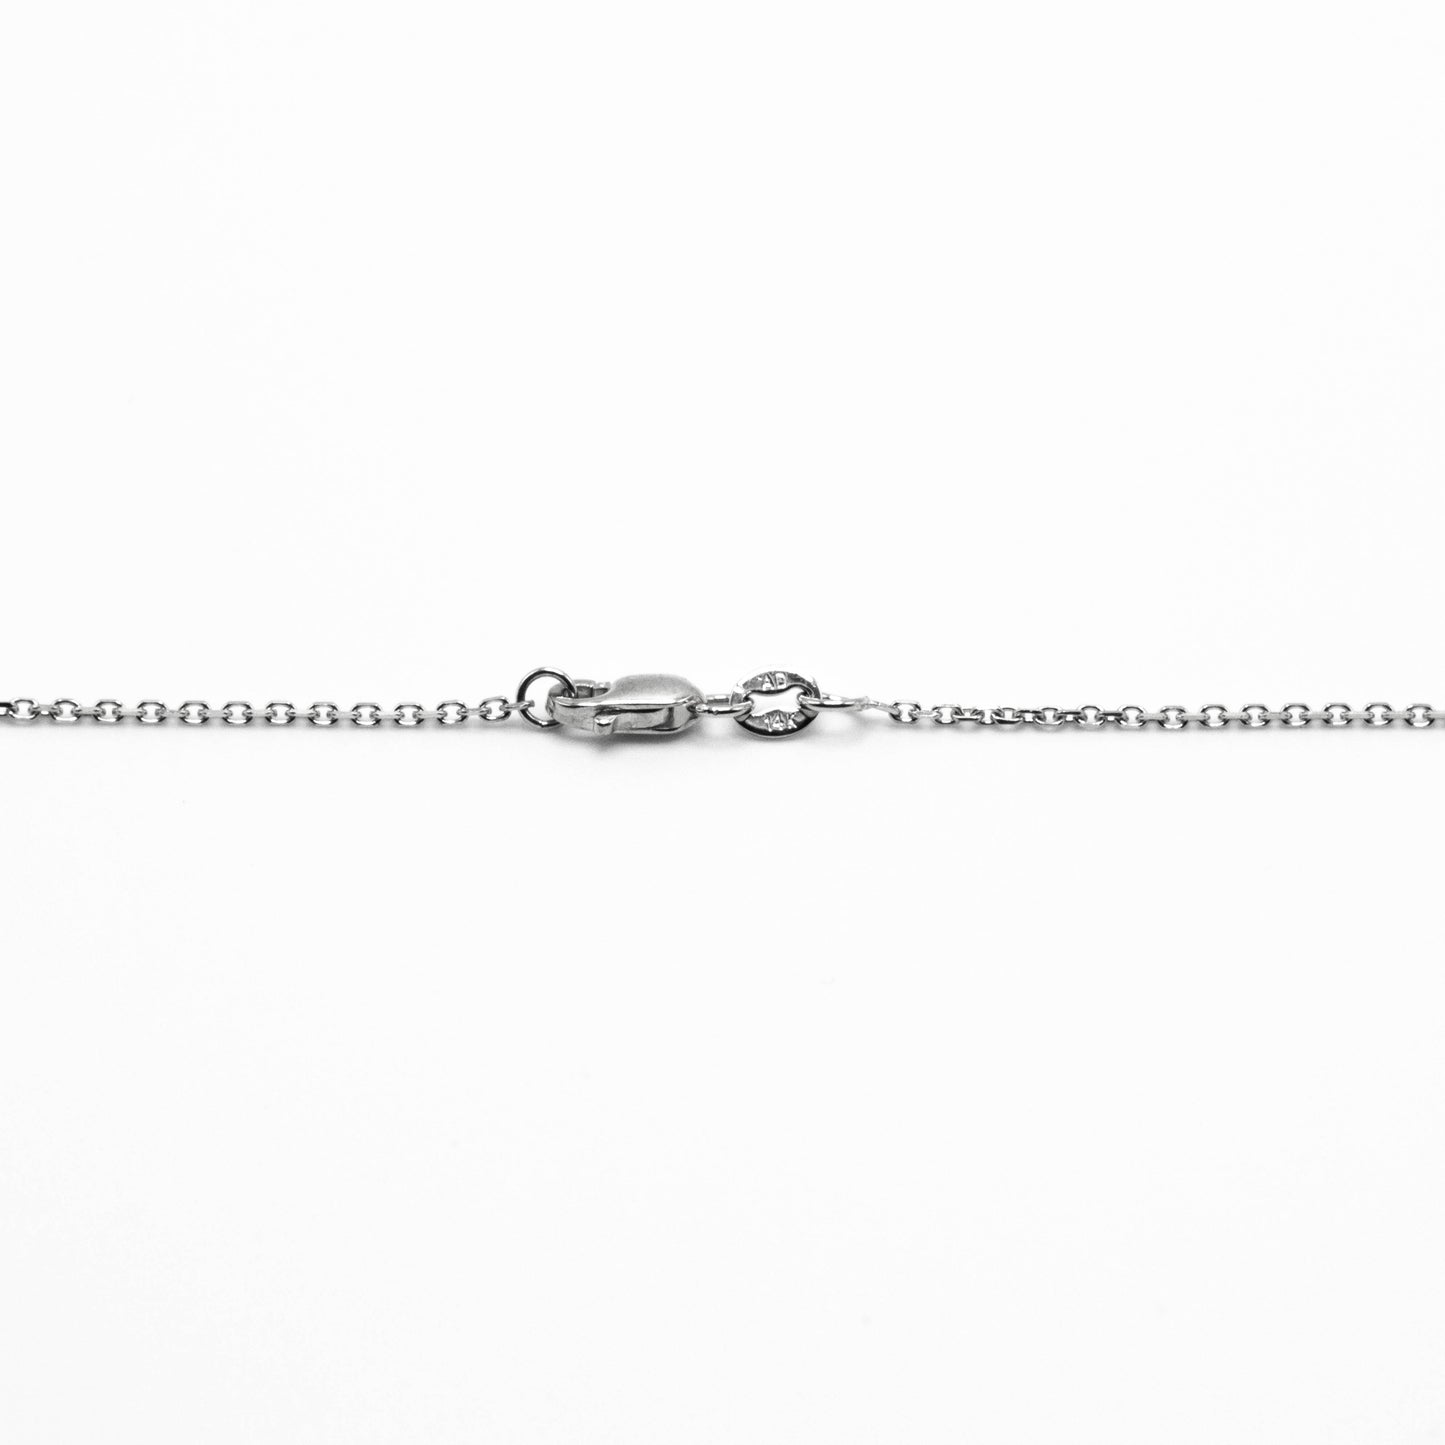 Pendant Saddle Cable Chain Necklace